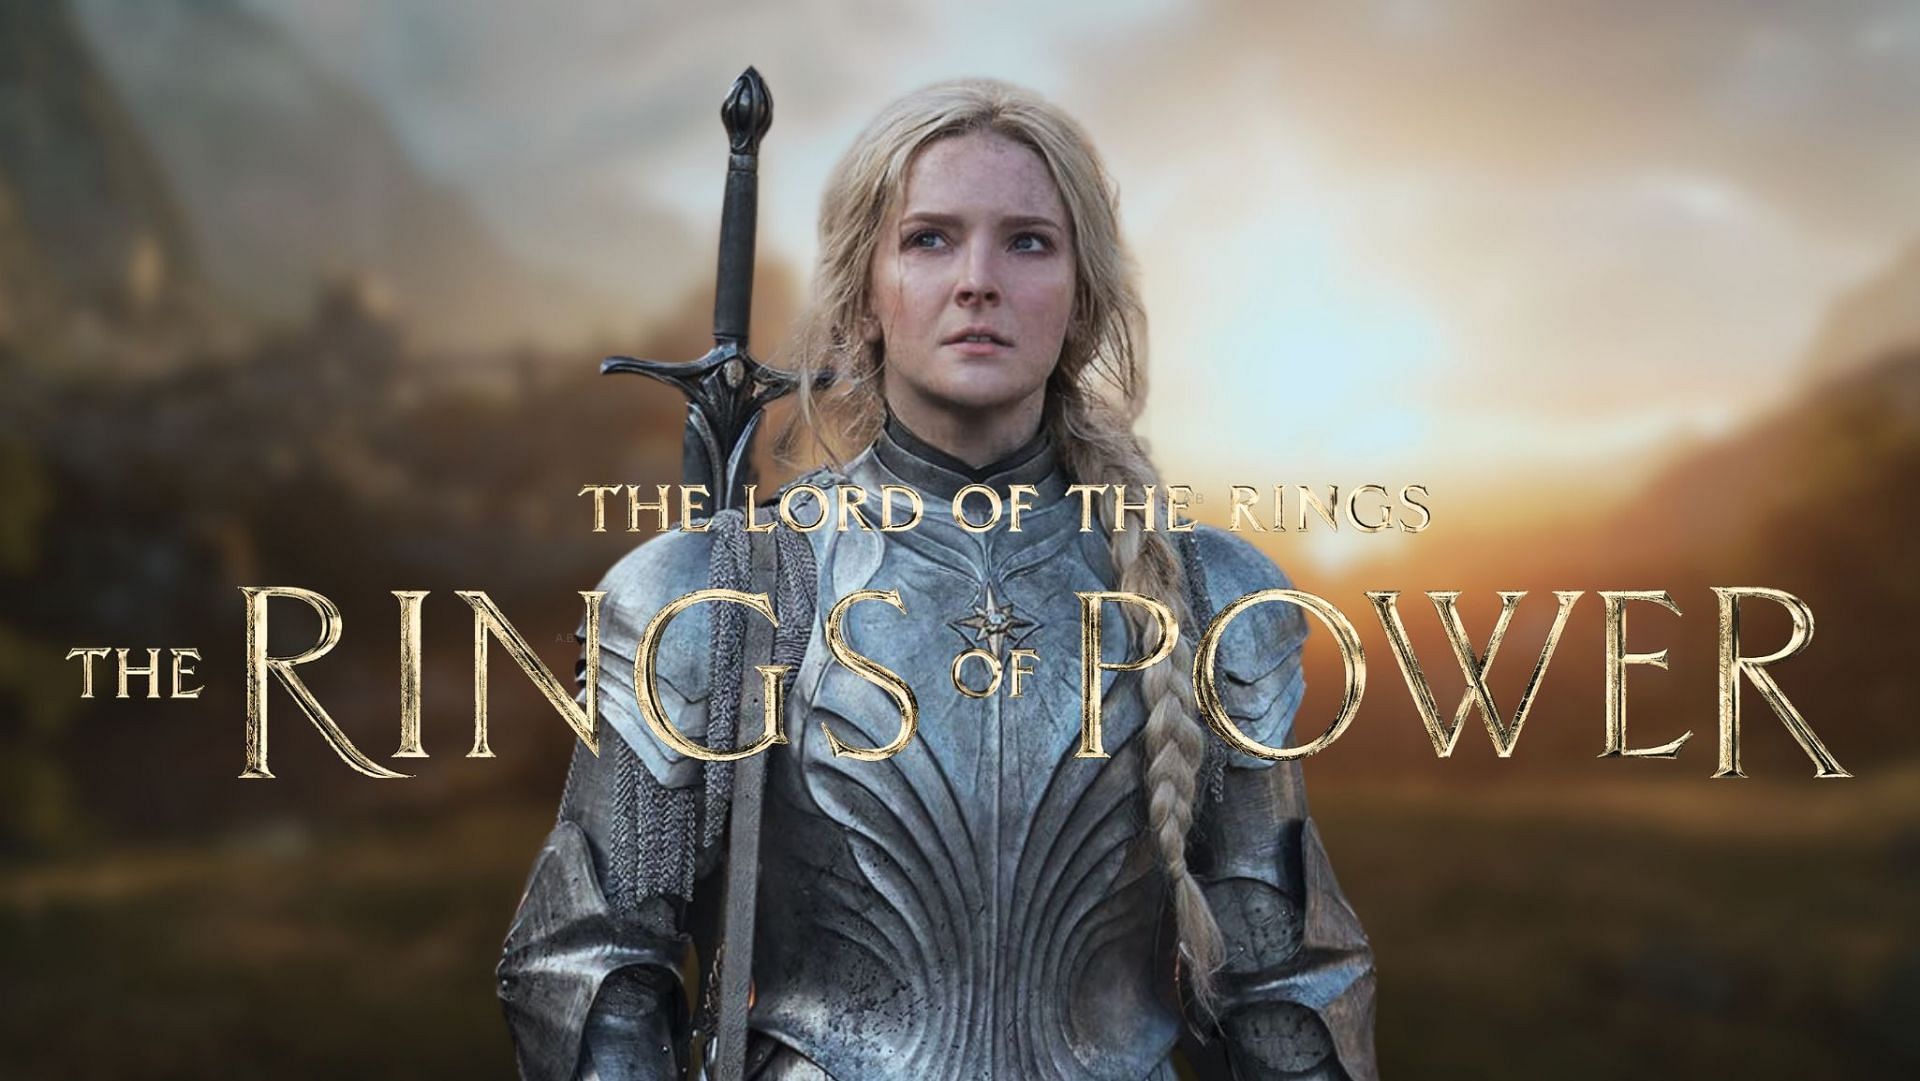 Power, intrigue, and fantasy: The Rings of Power Season 2 unveiled (Image via Sportskeeda)